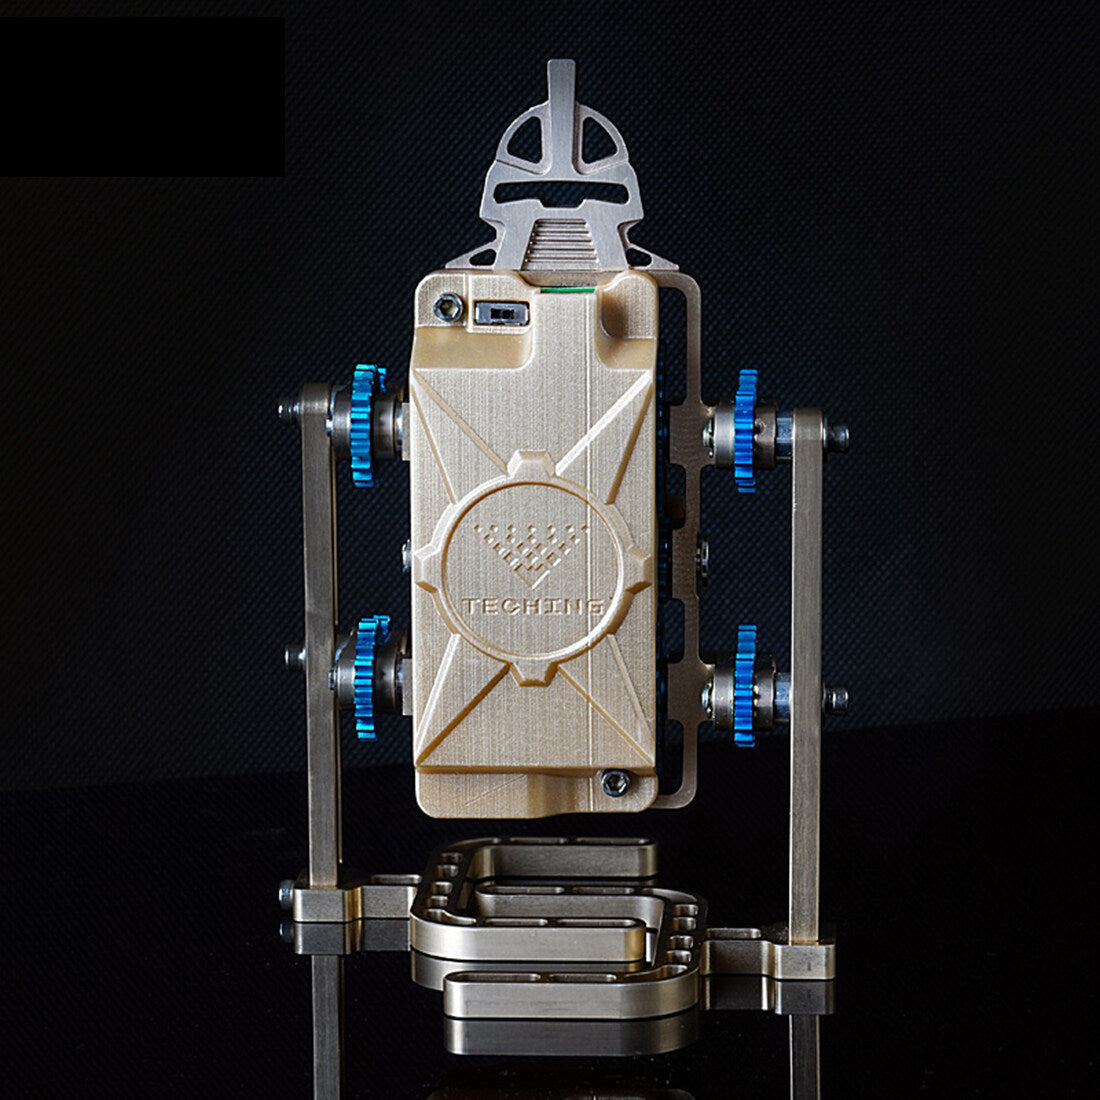 Teching Fußgänger-Roboter Modellbausatz, der funktioniert - 67 Teile